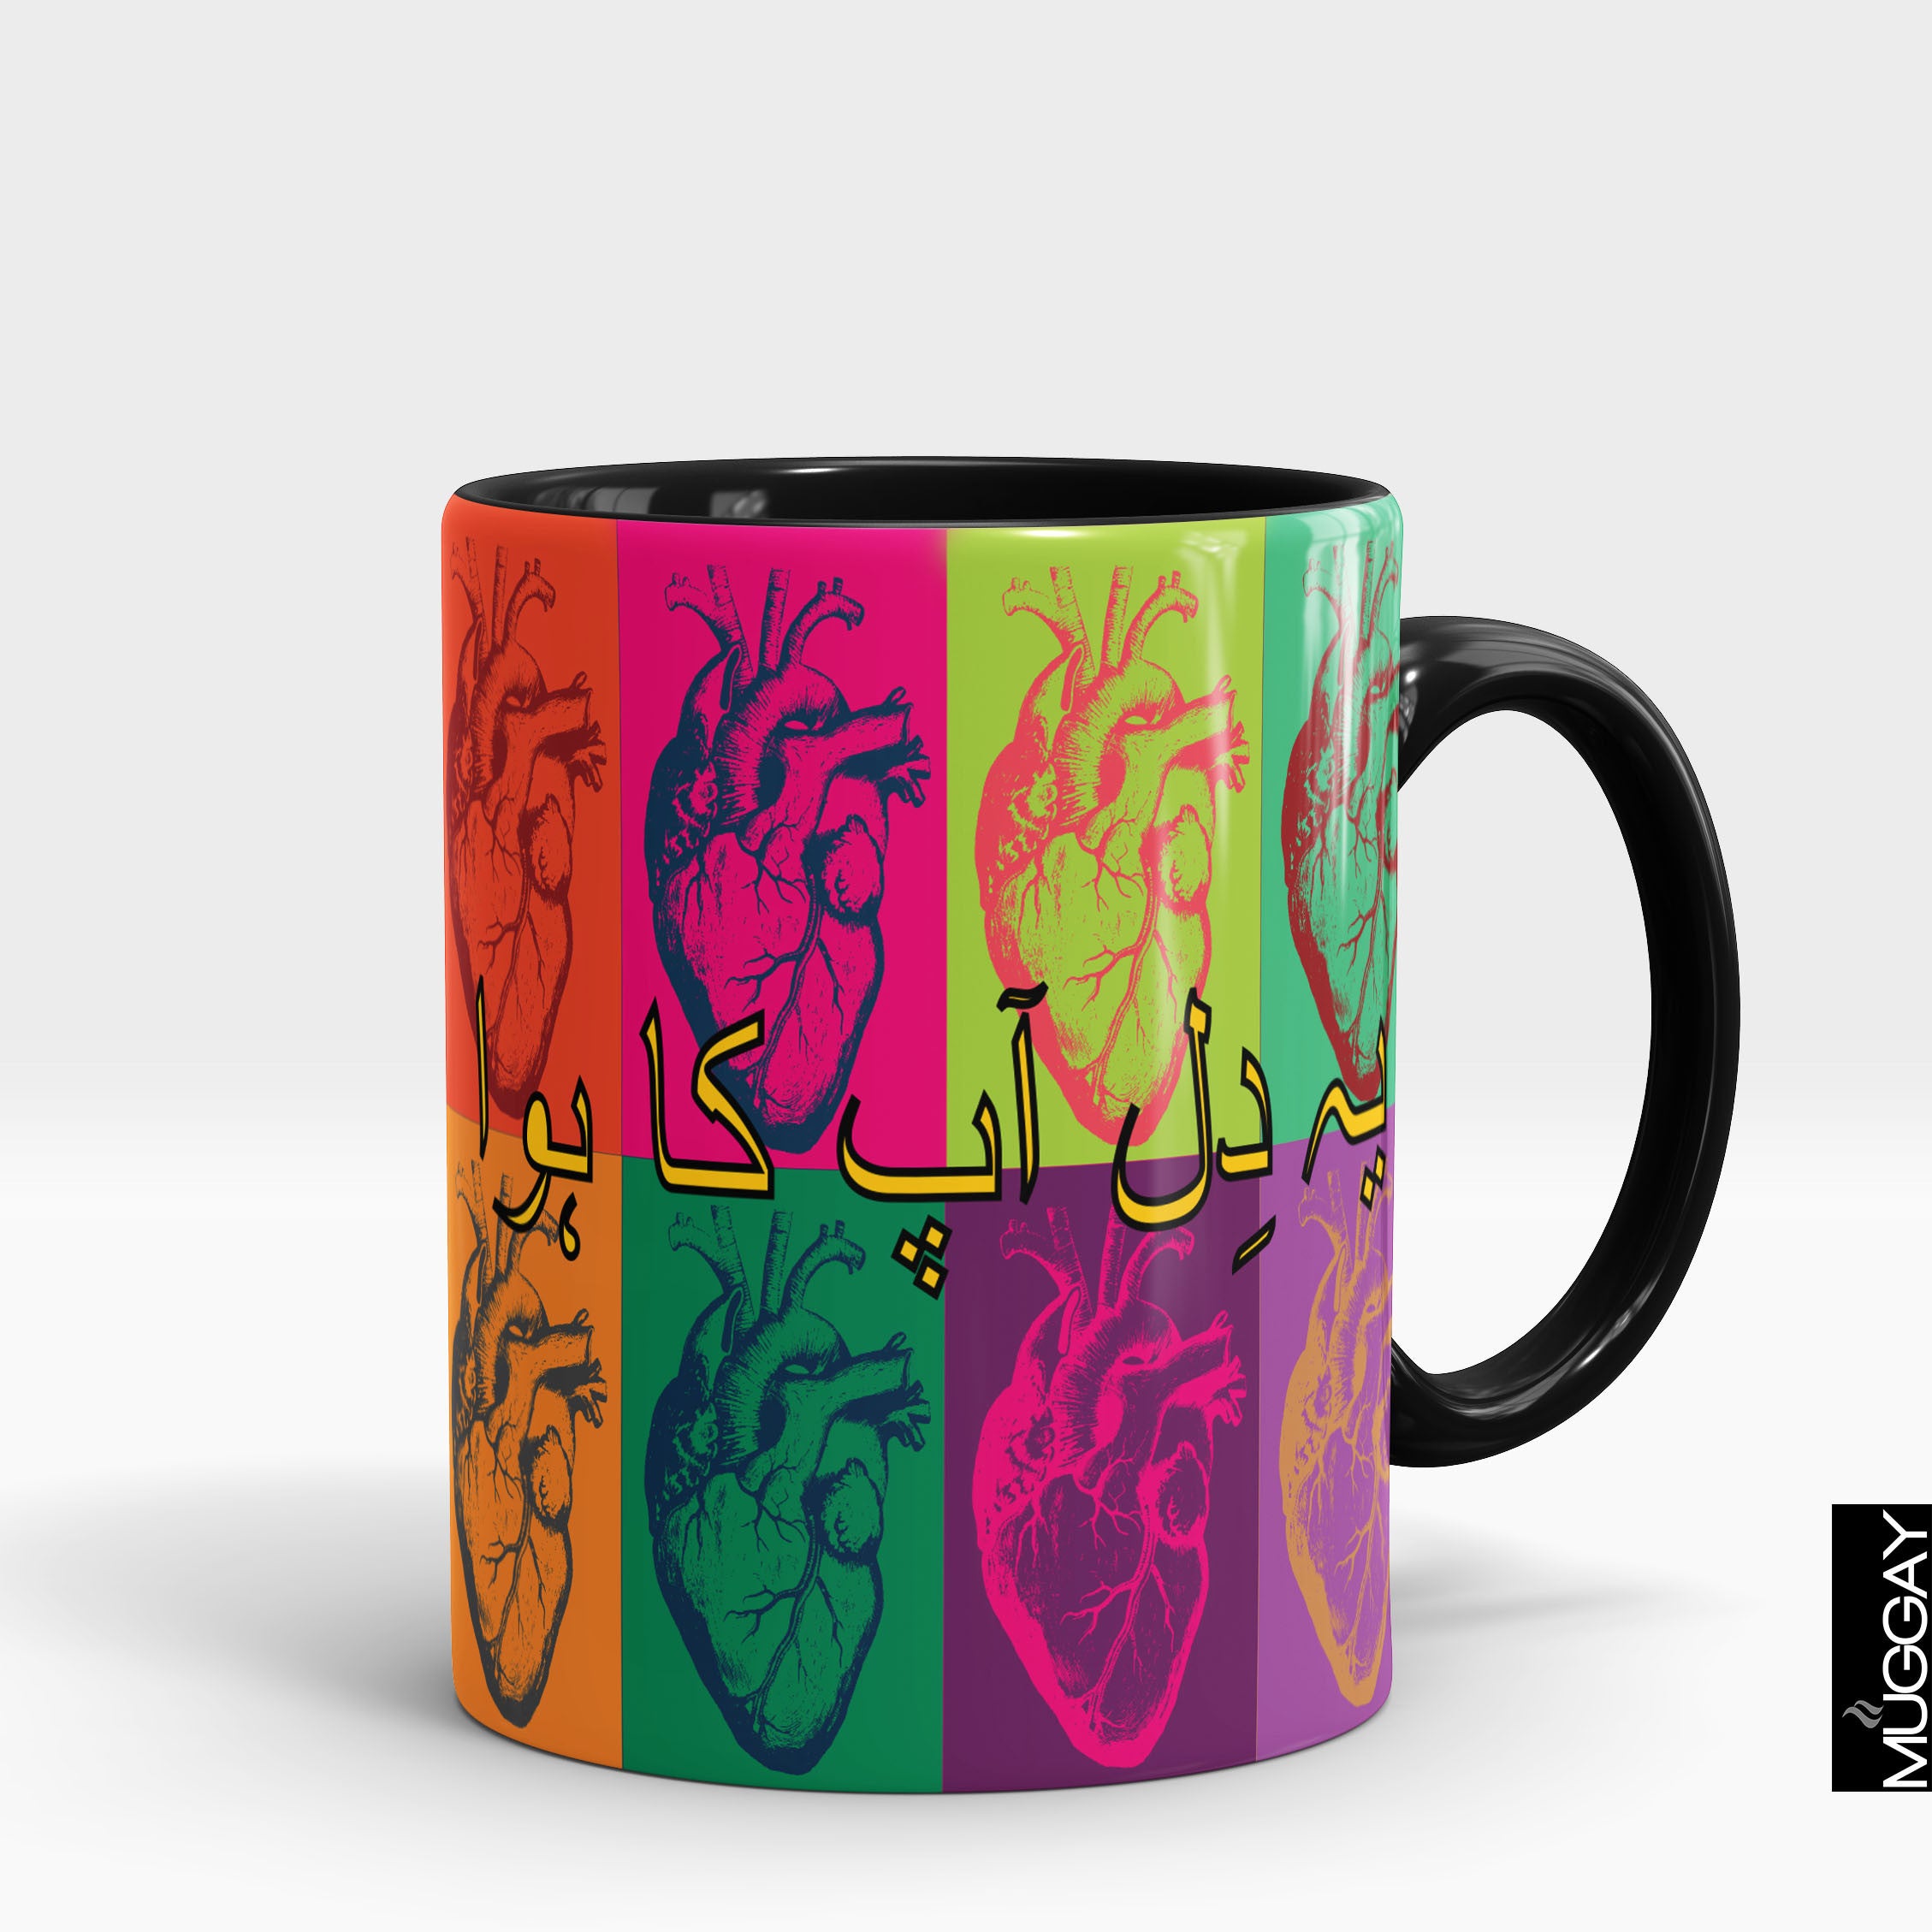 Desi funny Mugs27 - Muggay.com - Mugs - Printing shop - truck Art mugs - Mug printing - Customized printing - Digital printing - Muggay 